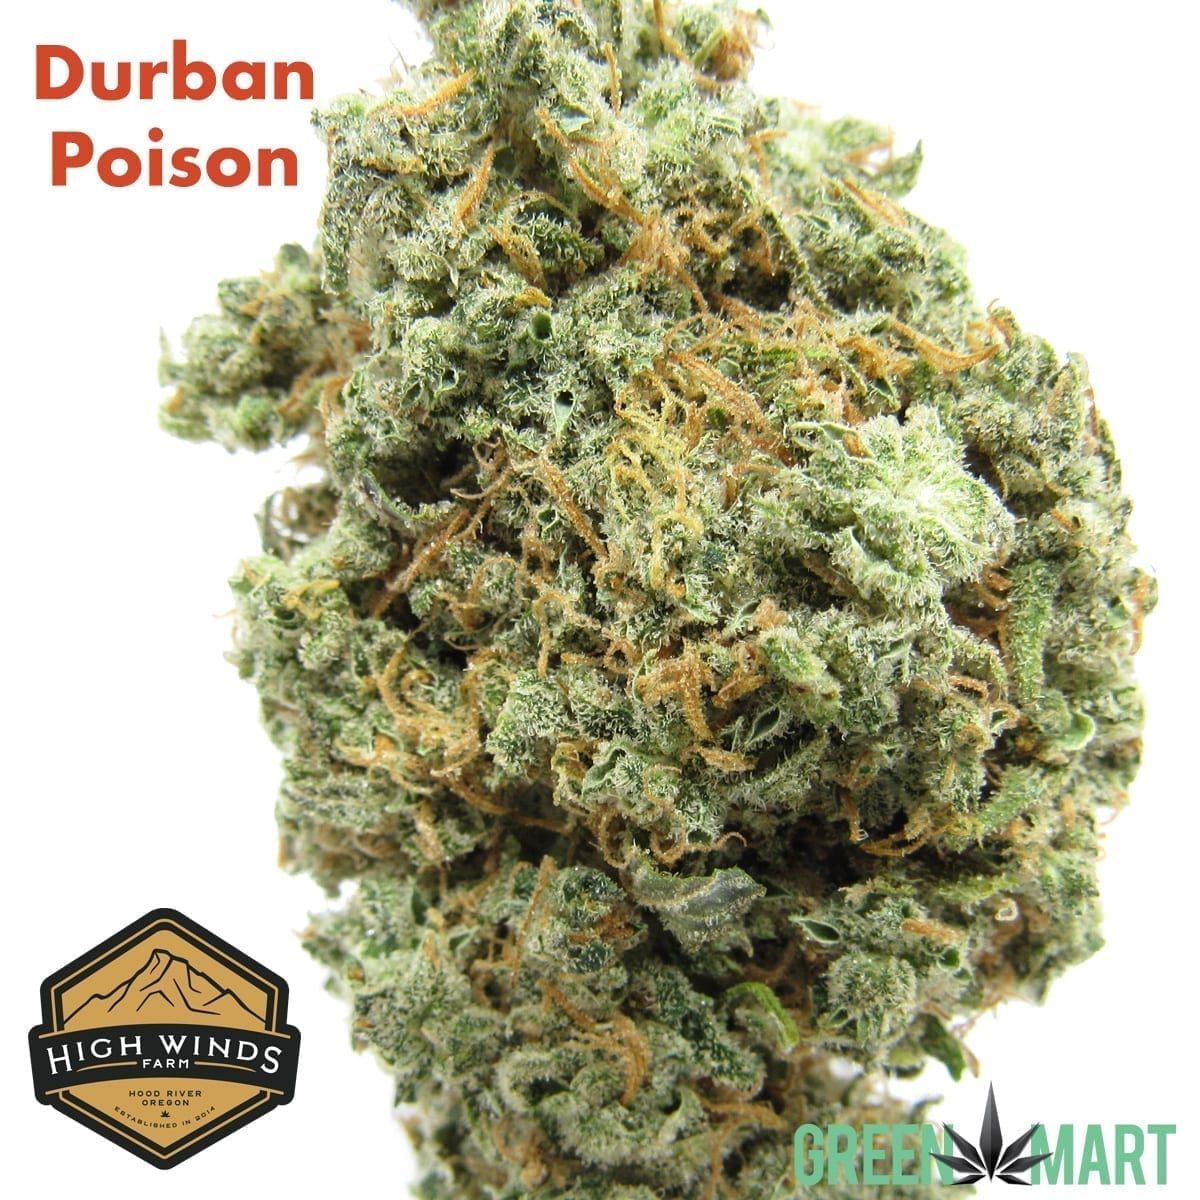 Durban Poison by High Winds Farm